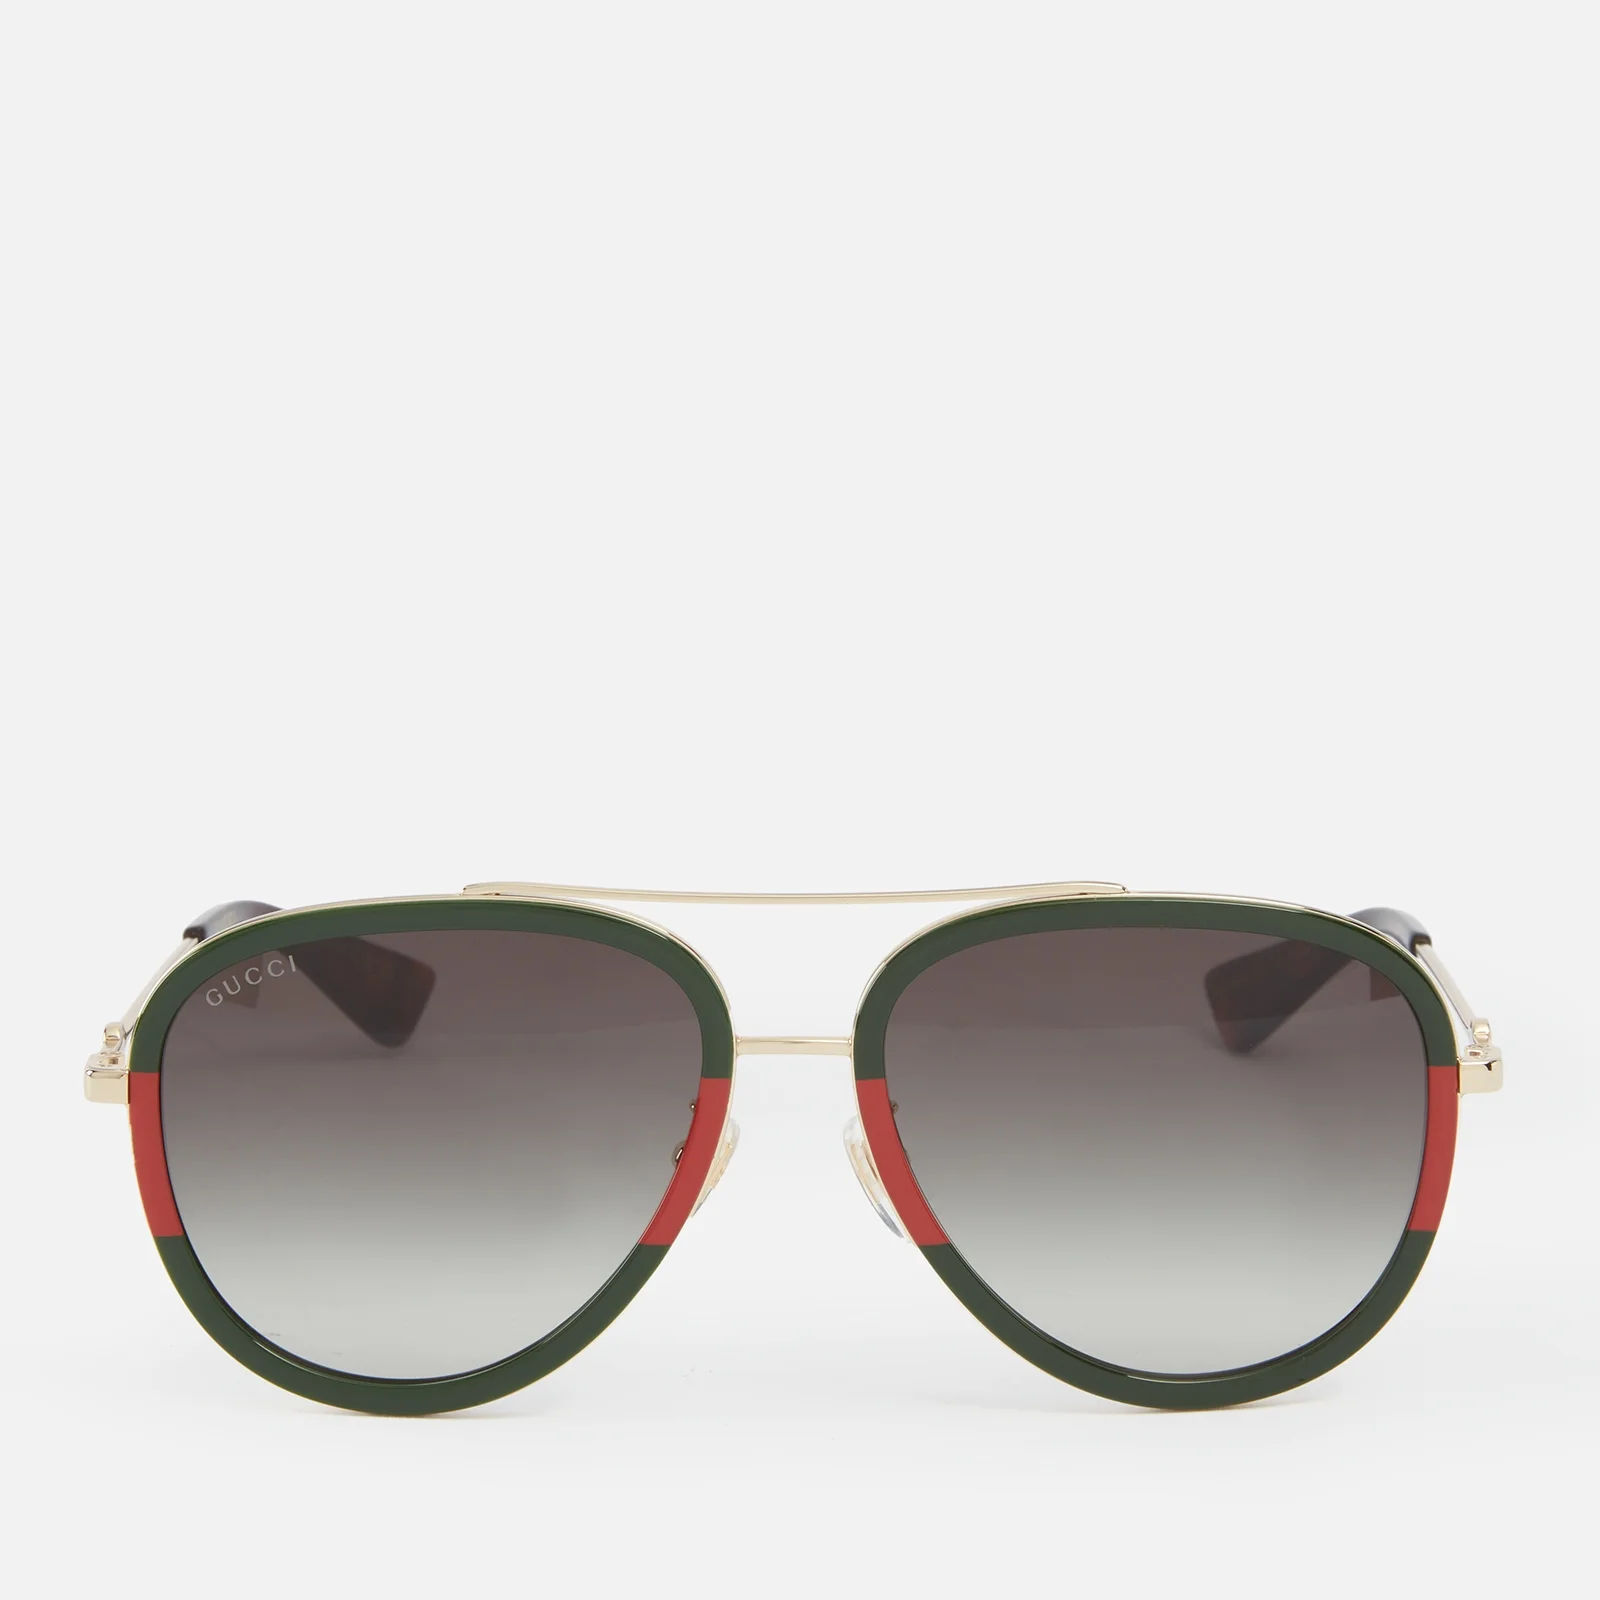 Gucci Metal Aviator-Style Sunglasses Image 1